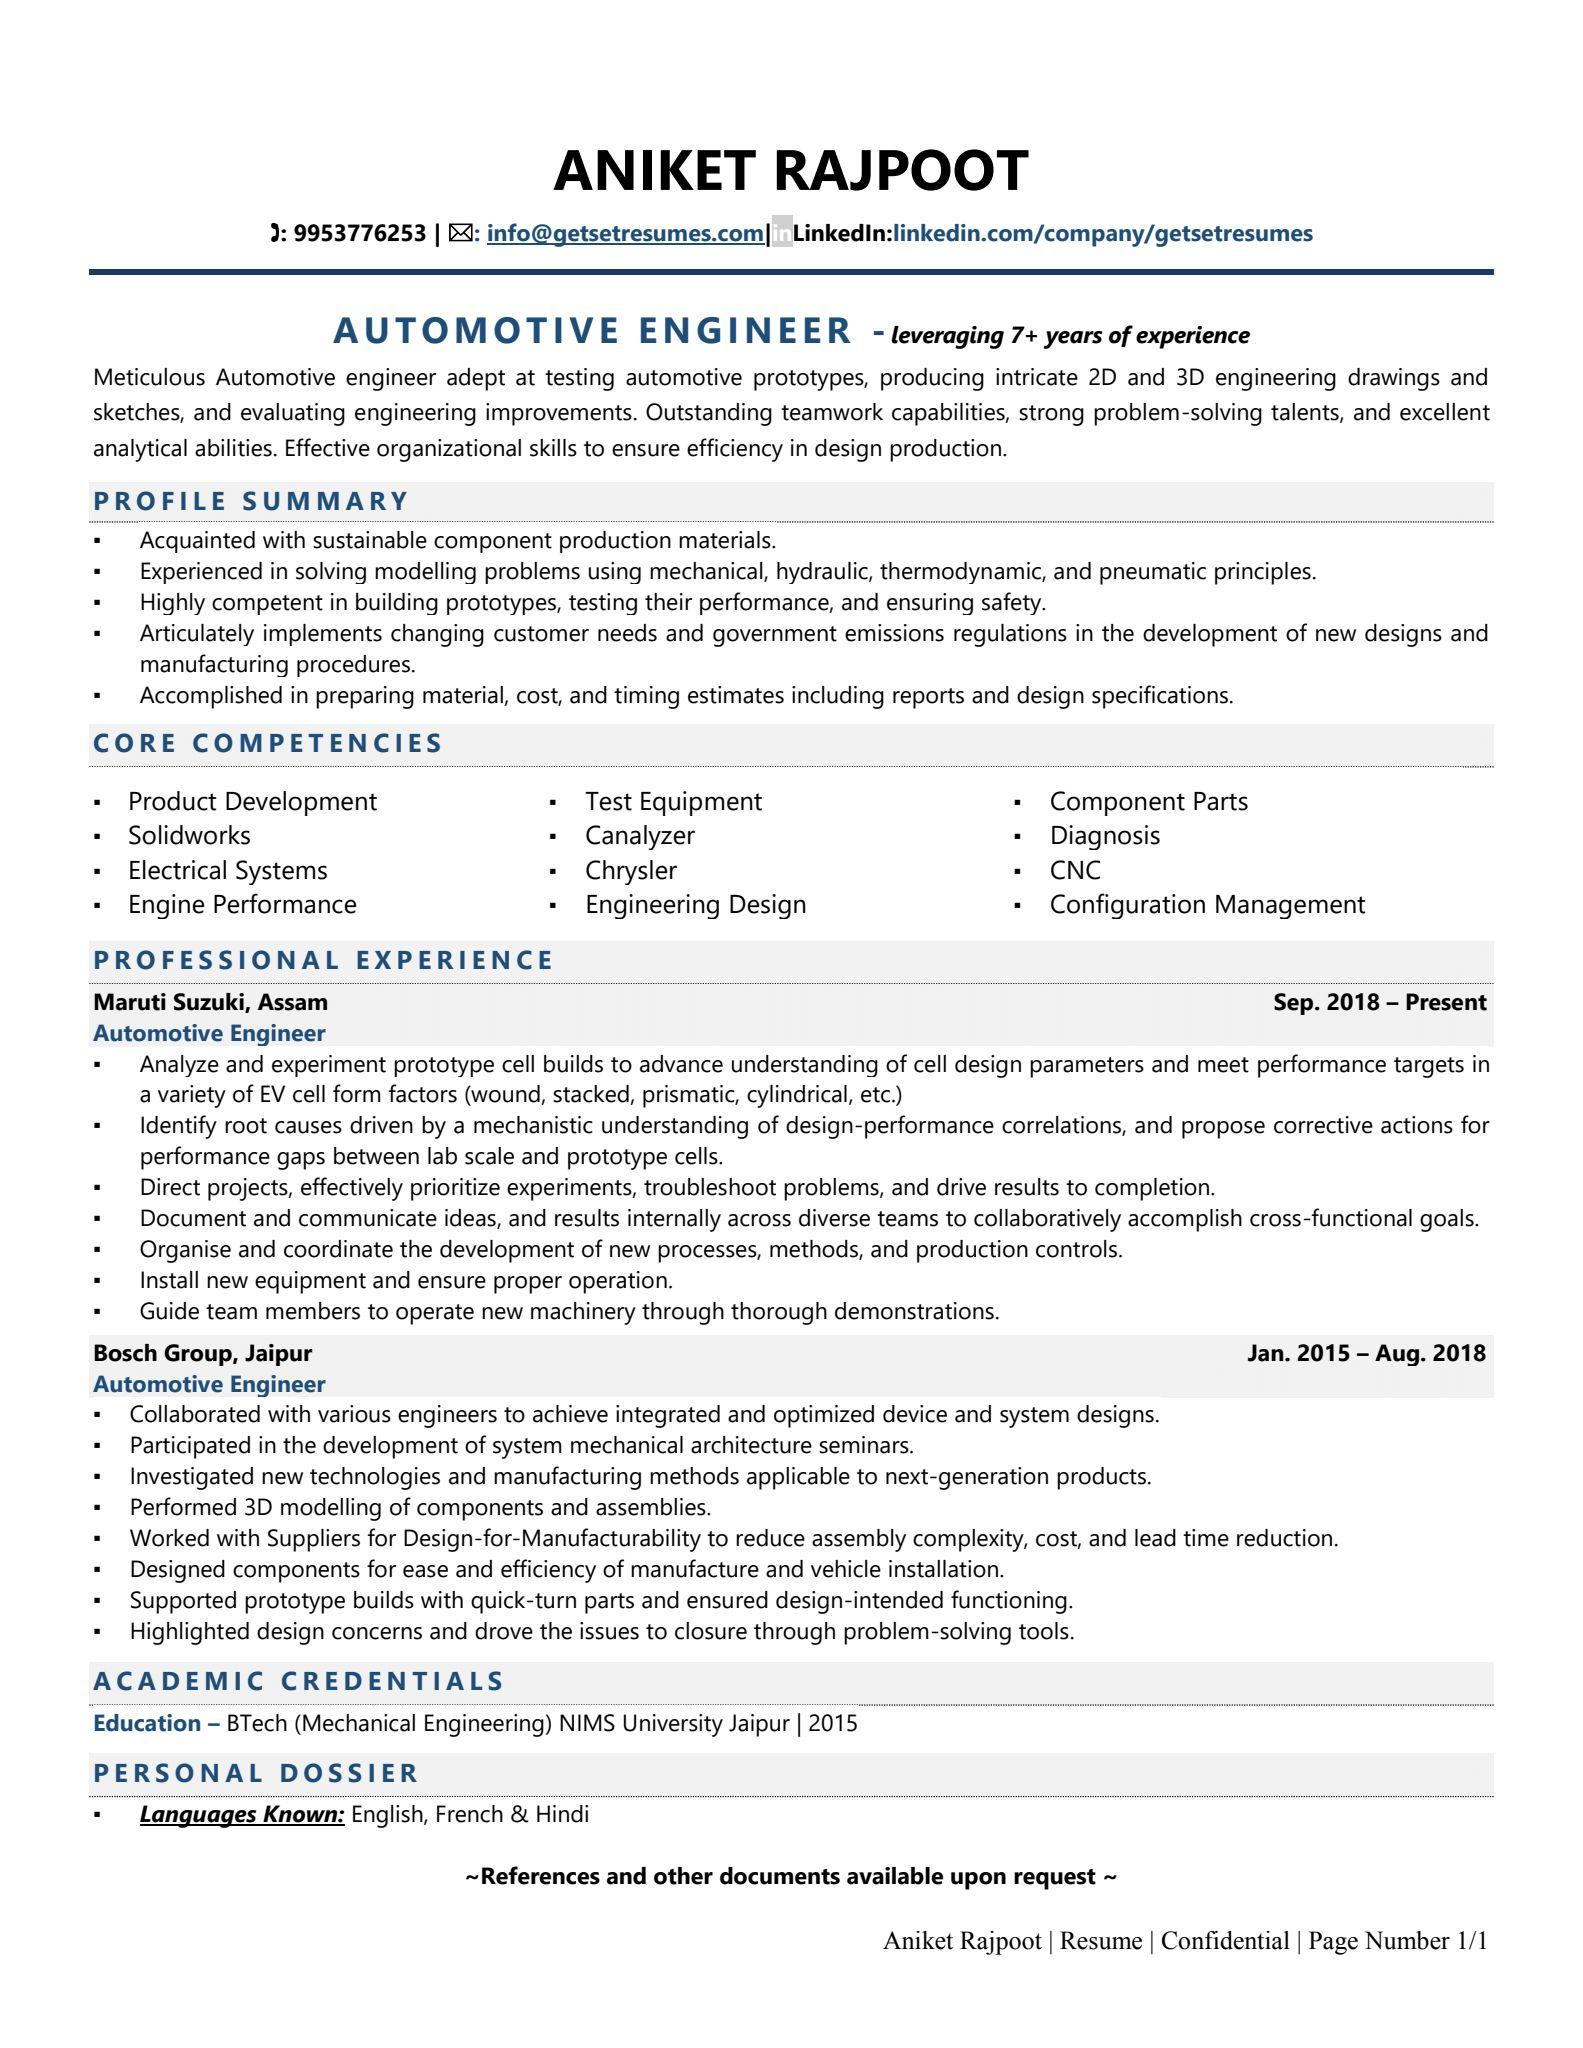 Automotive Engineer - Resume Example & Template